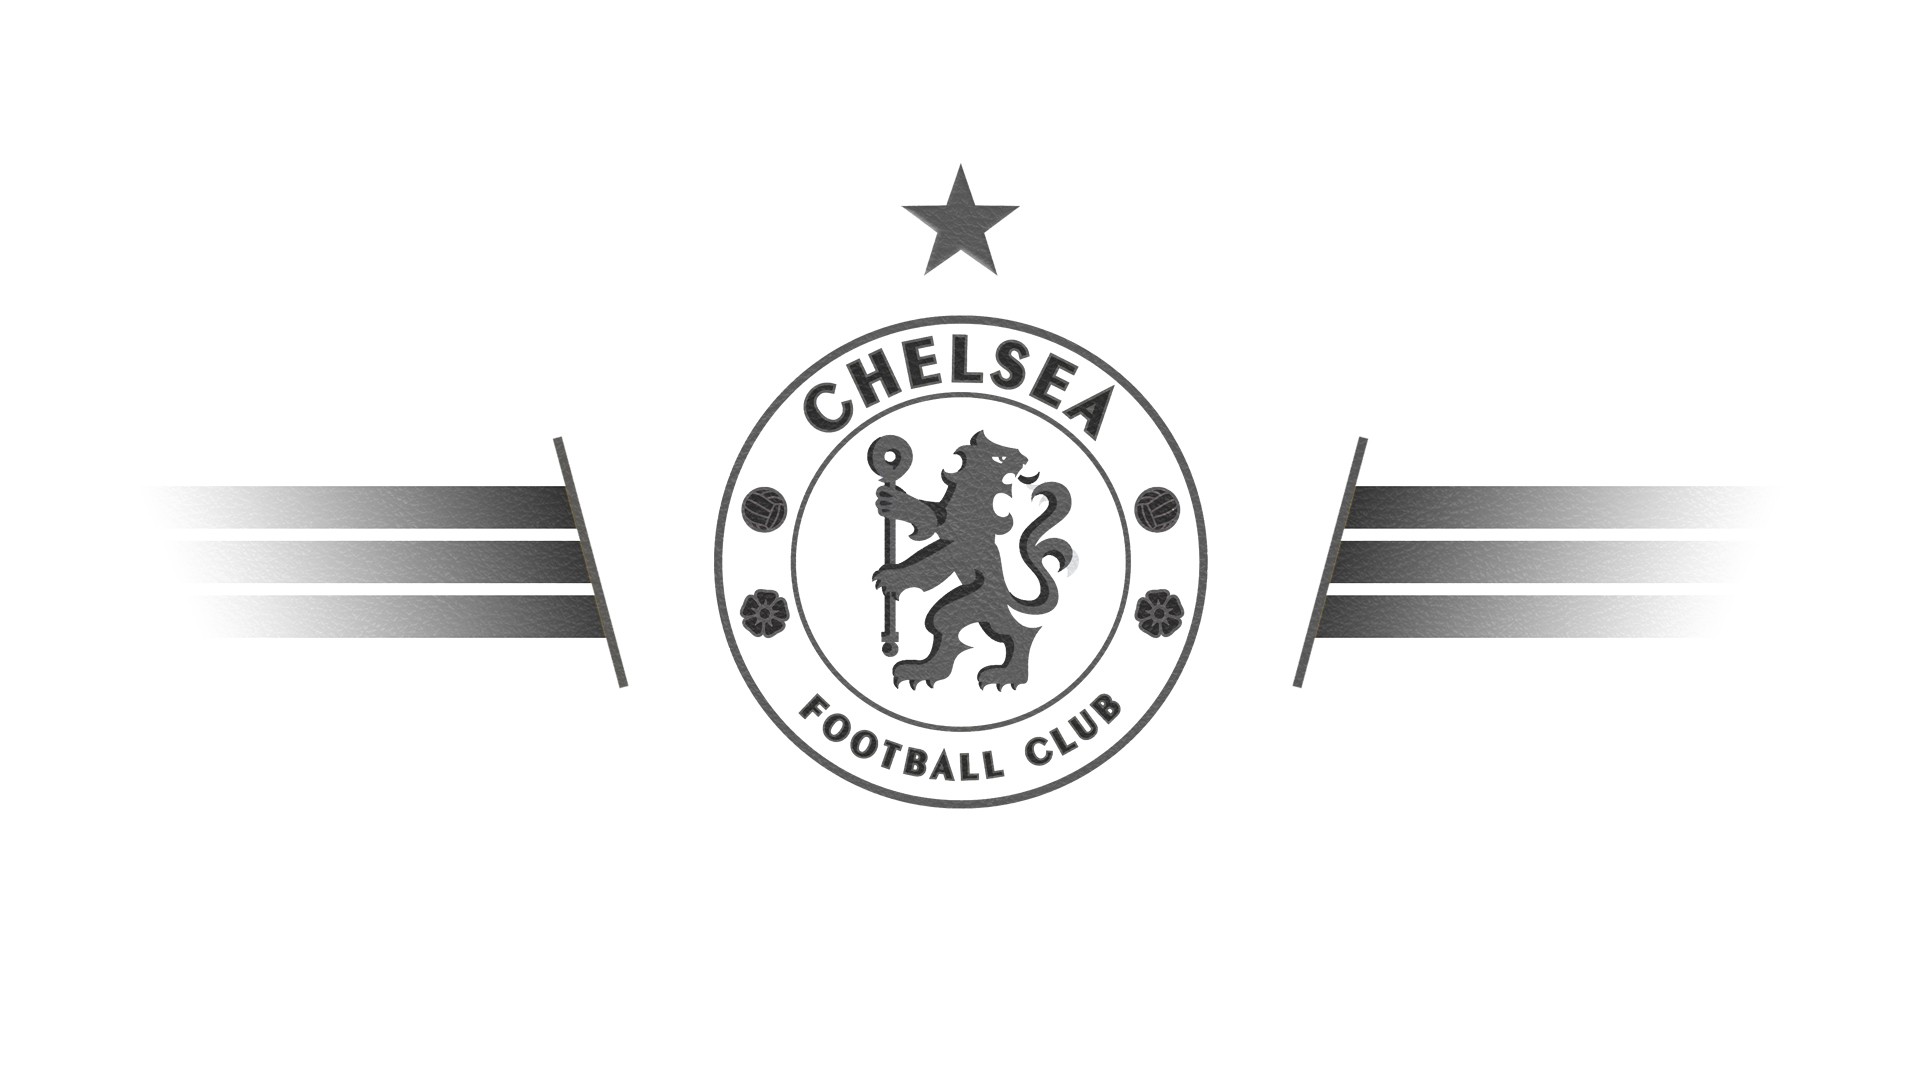 General 1920x1080 Chelsea FC soccer soccer clubs Premier League logo England monochrome sport simple background white background British